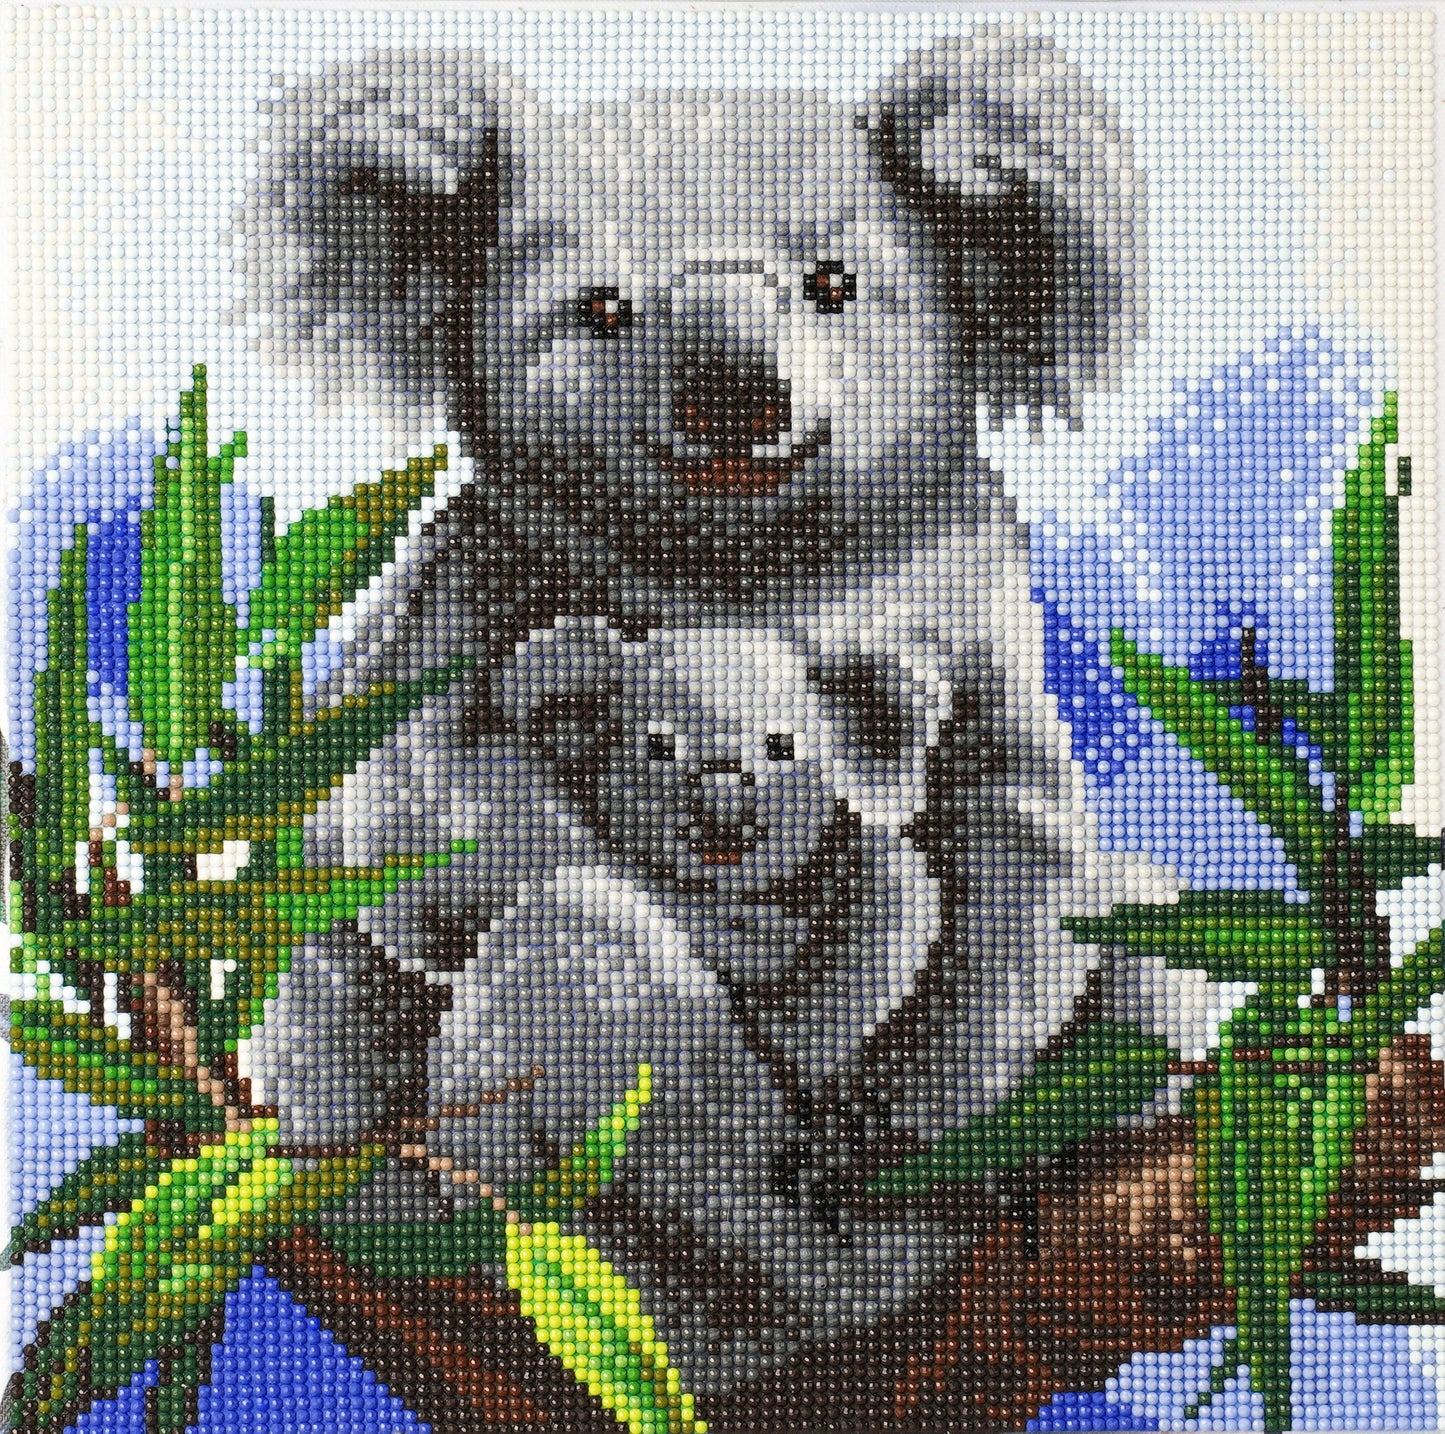 CAK-A87: "Koala Bears" 30 x 30cm (Medium)